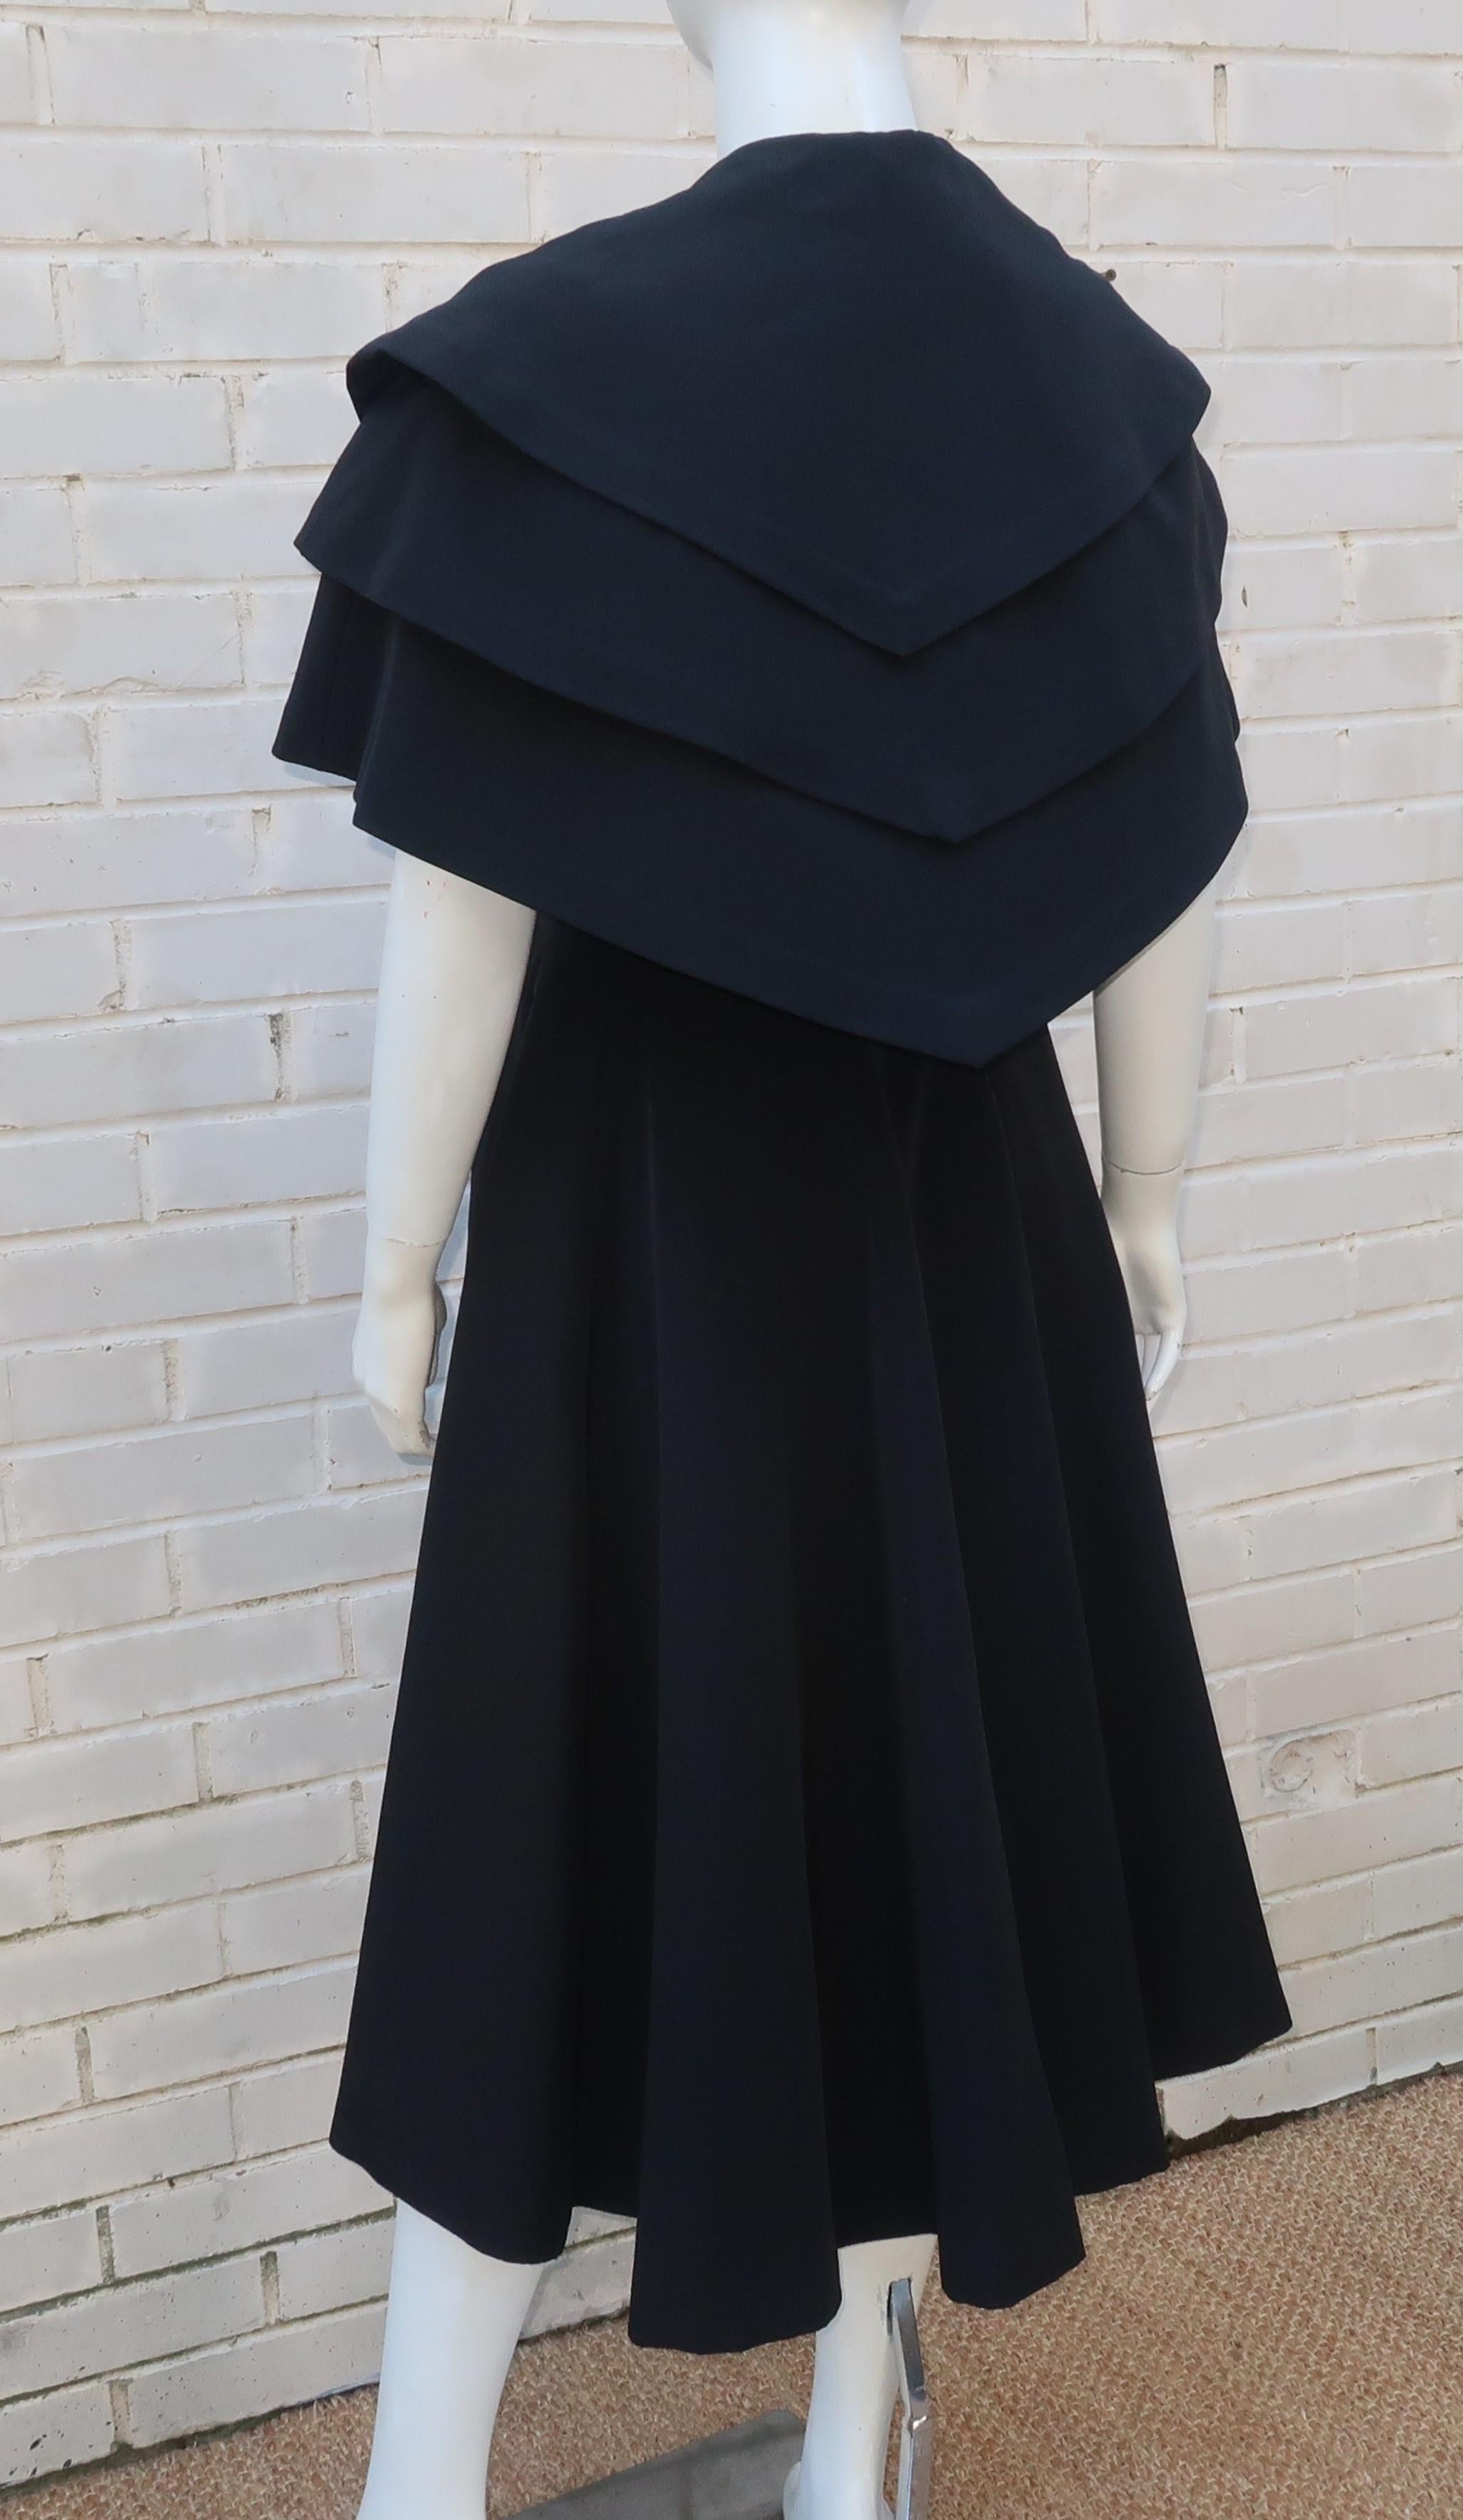 Bonwit Teller 'New Look' Black Silk Faille Evening Coat Dress, C.1950 1